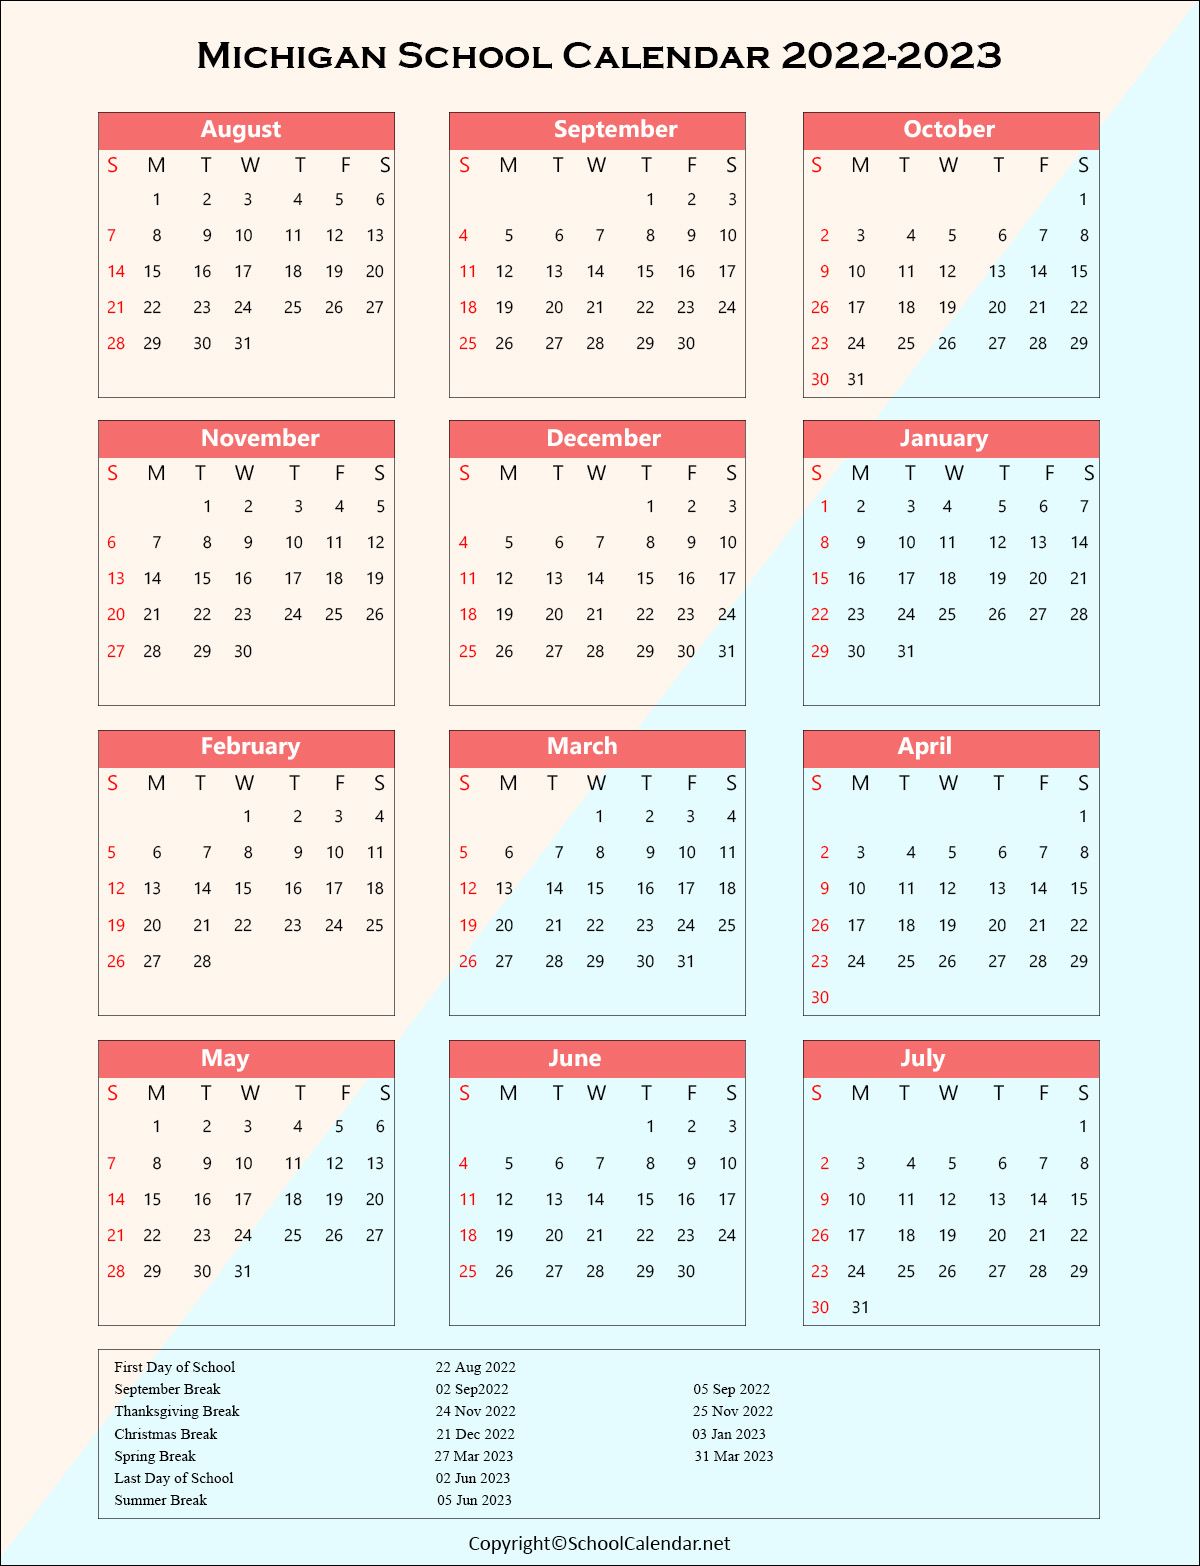 Michigan School Holiday Schedule 2022